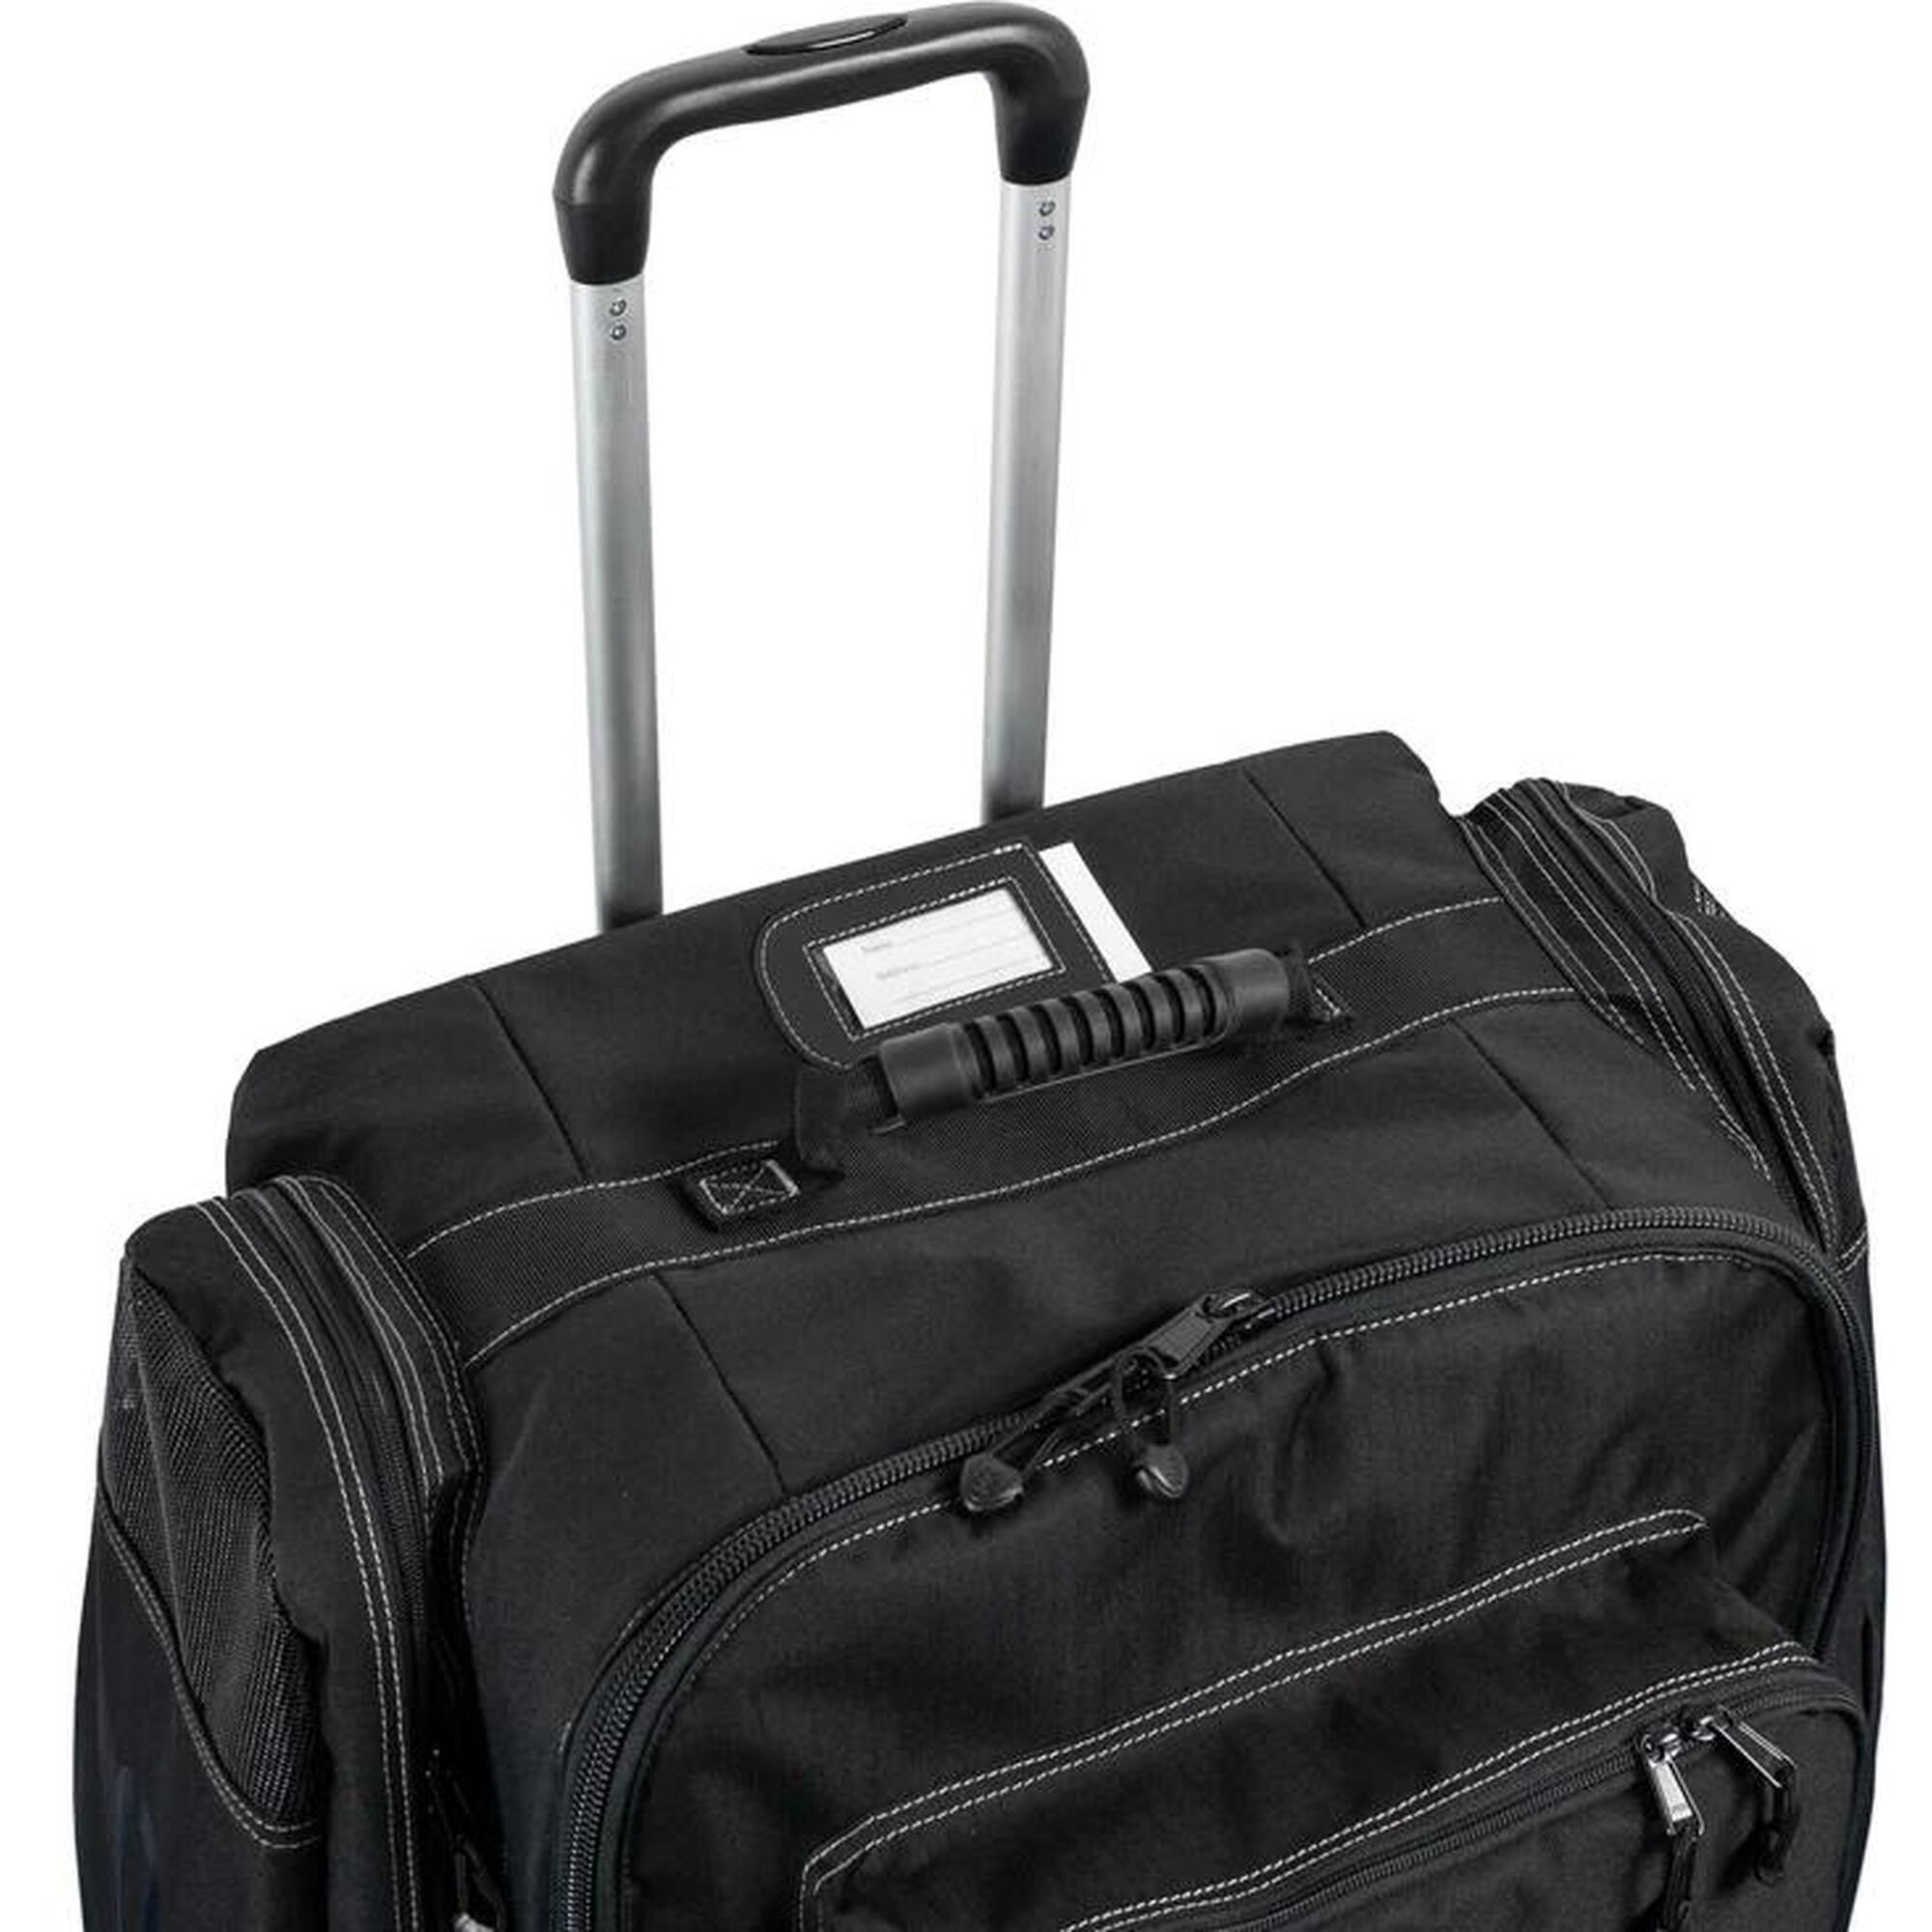 Moby 5 Trolley Wheeled Bag & Backpack 115L - Black